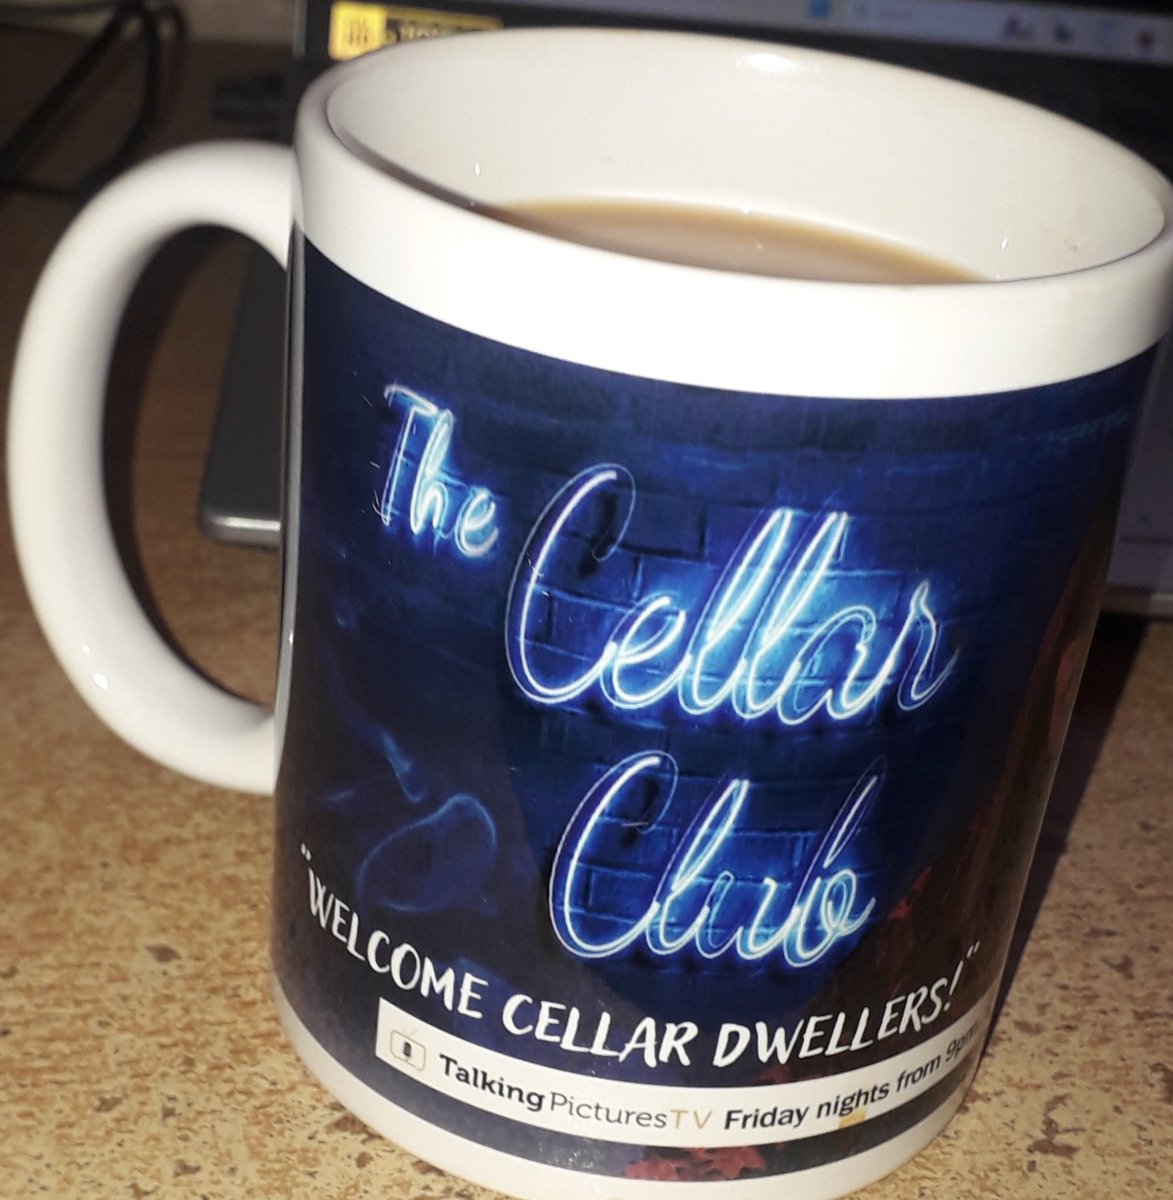 Having a brew with me new Cellar Club cup. #CellarClub #TheFilmCrowd @TalkingPicsTV